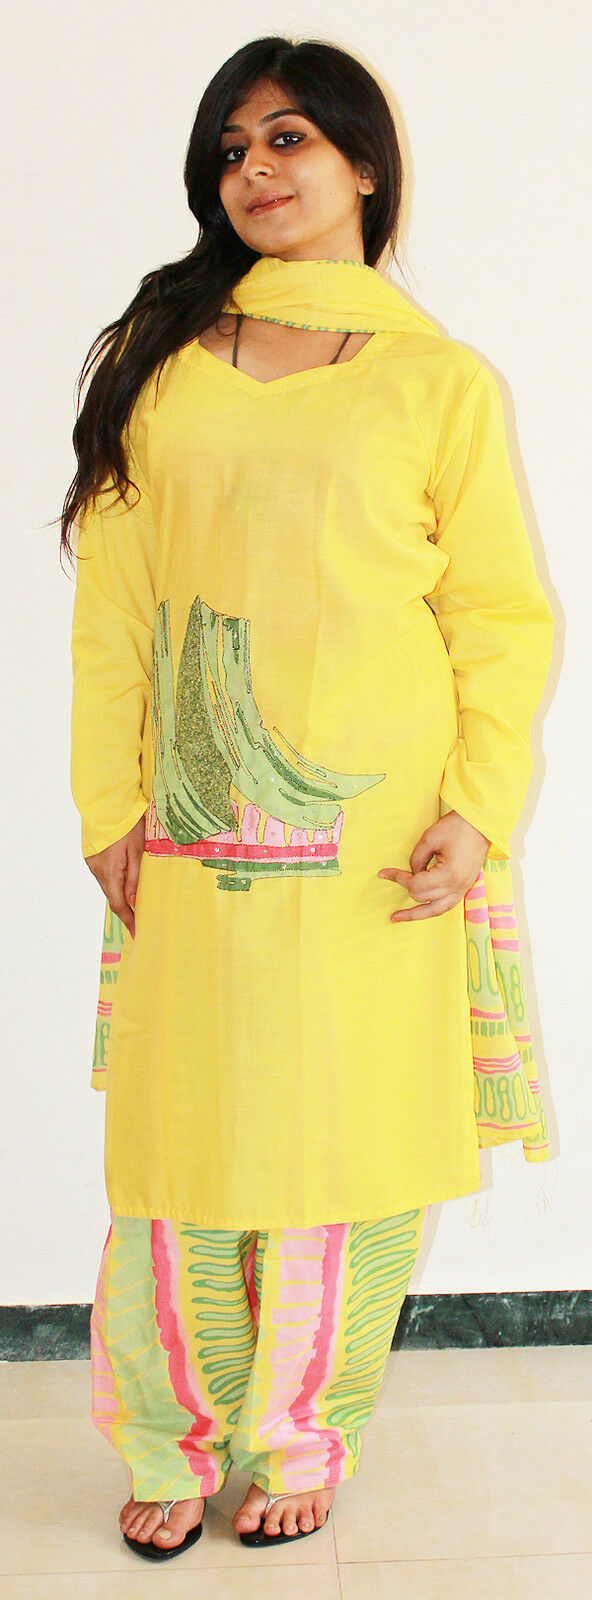 Yellow Exclusive Designer salwar kameez party wear Cotton suit sz 44 Indian